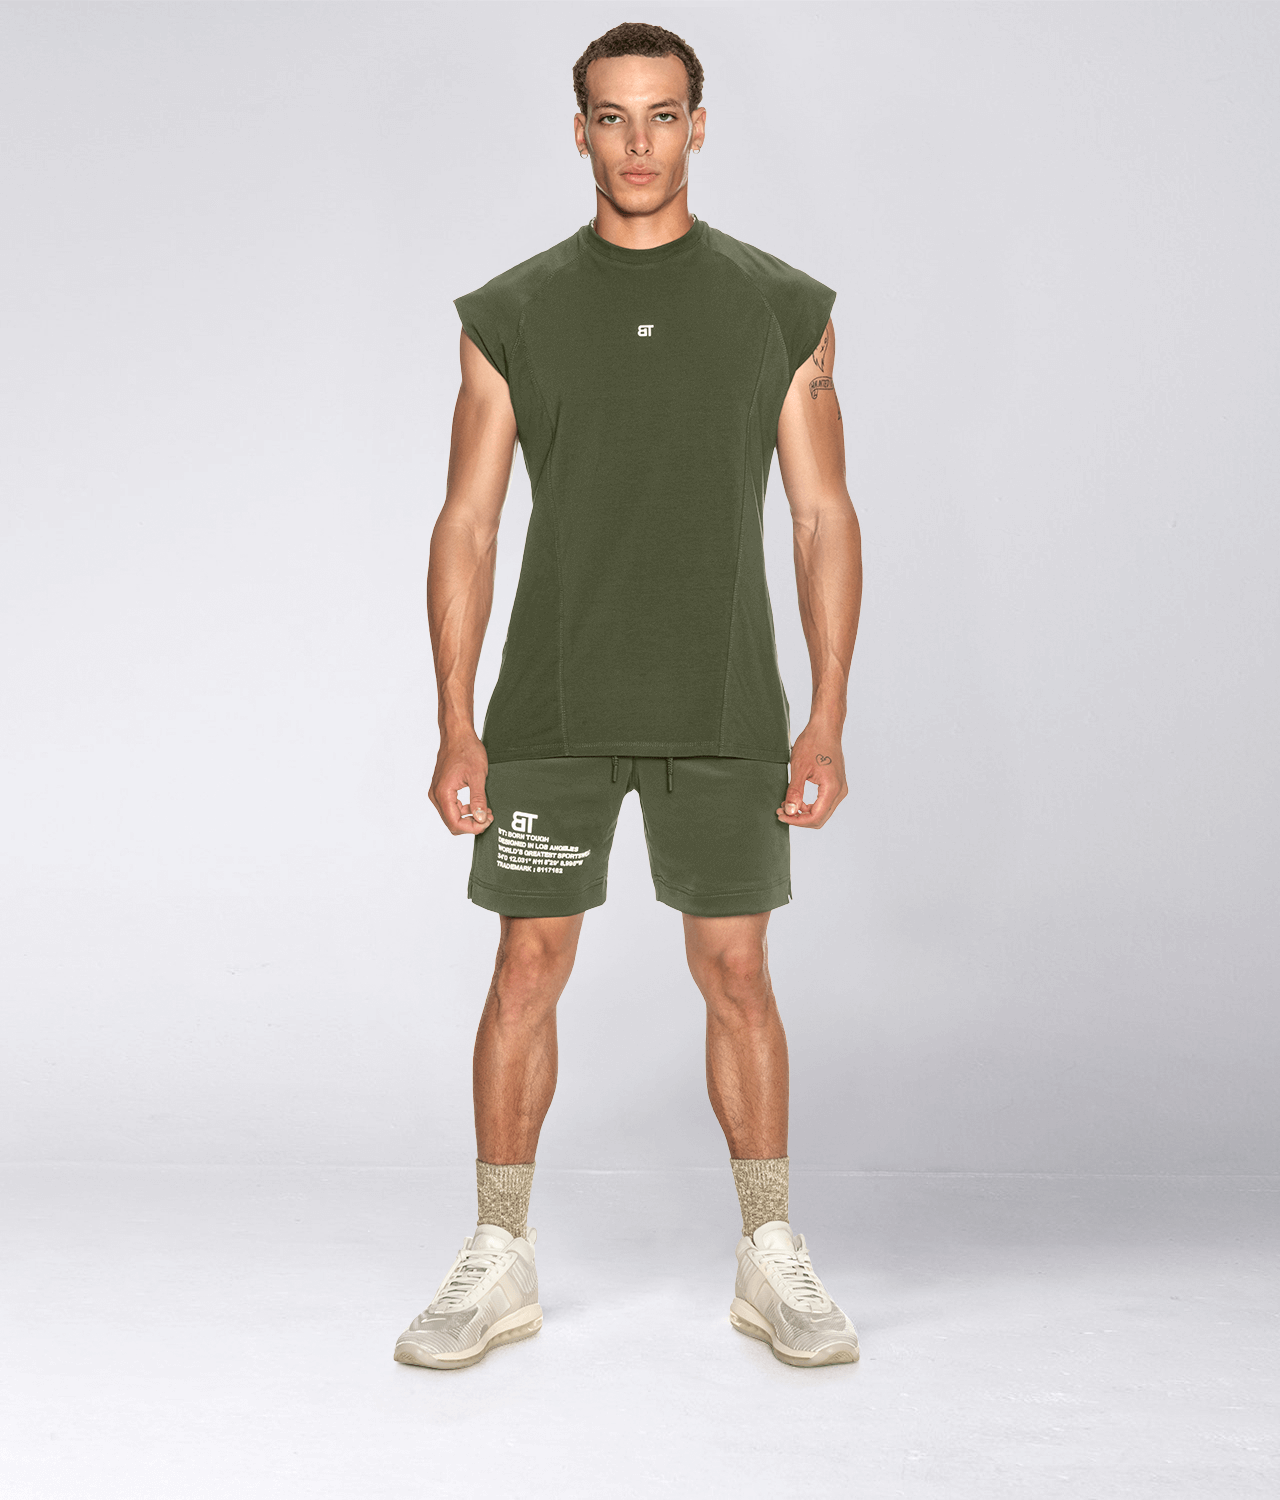 950. Viscose Sleeveless Back Shoulder Drop T-Shirt Military Green